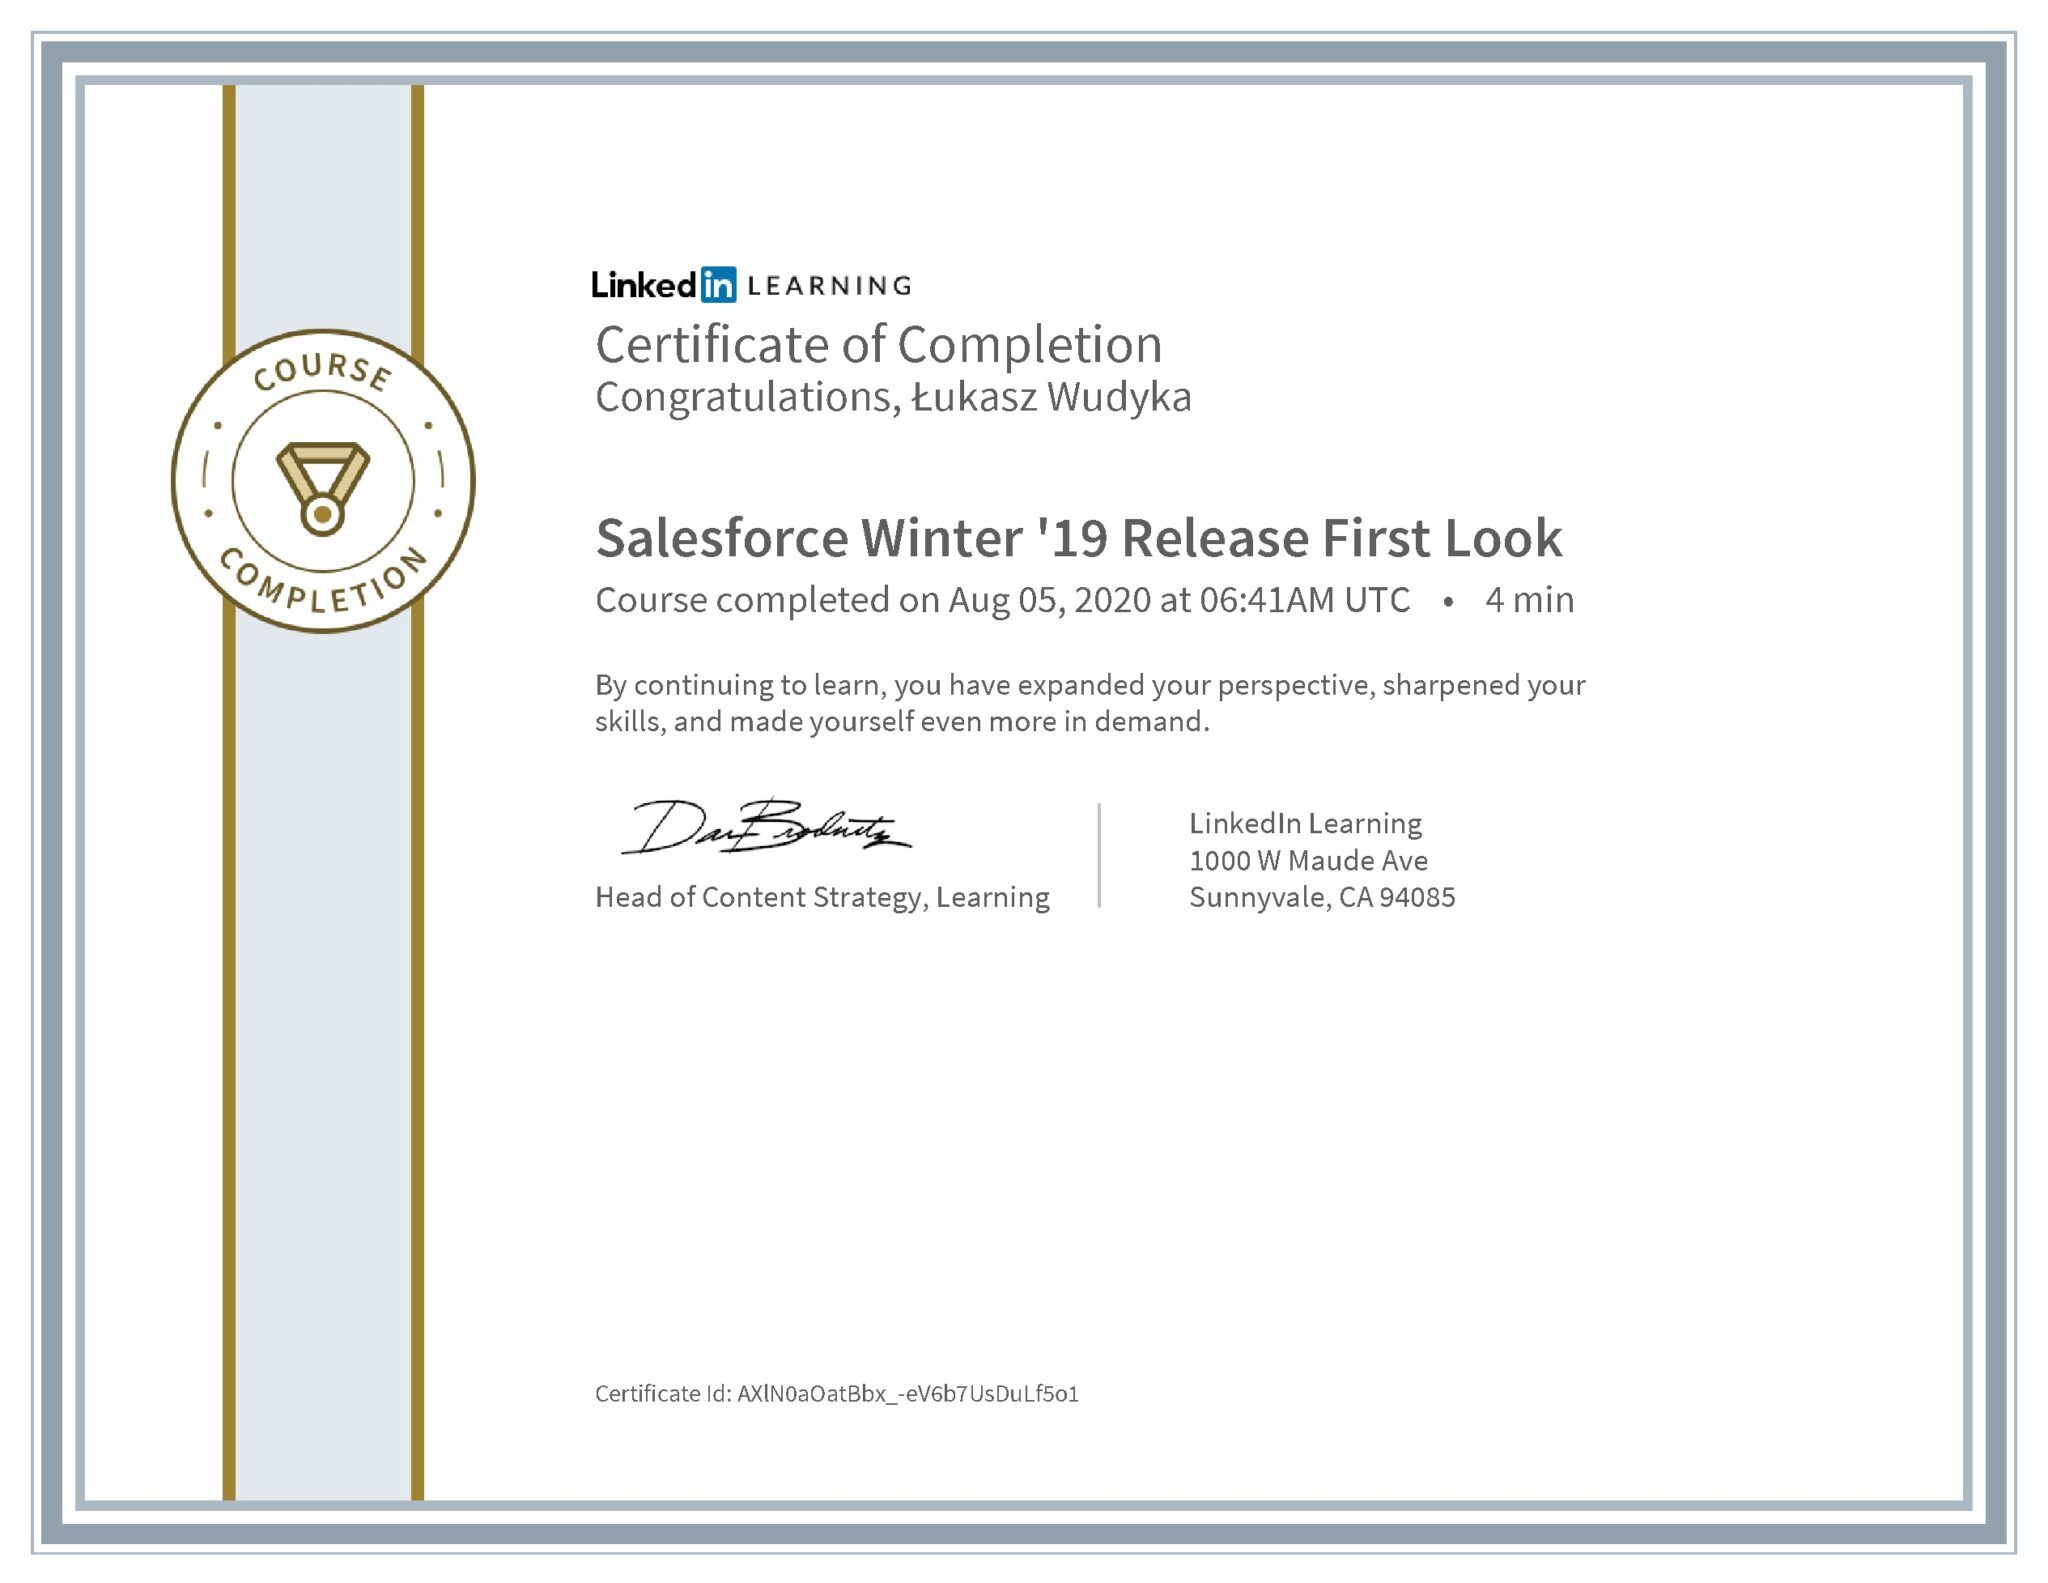 Łukasz Wudyka certyfikat LinkedIn Salesforce Winter'19 Release First Look